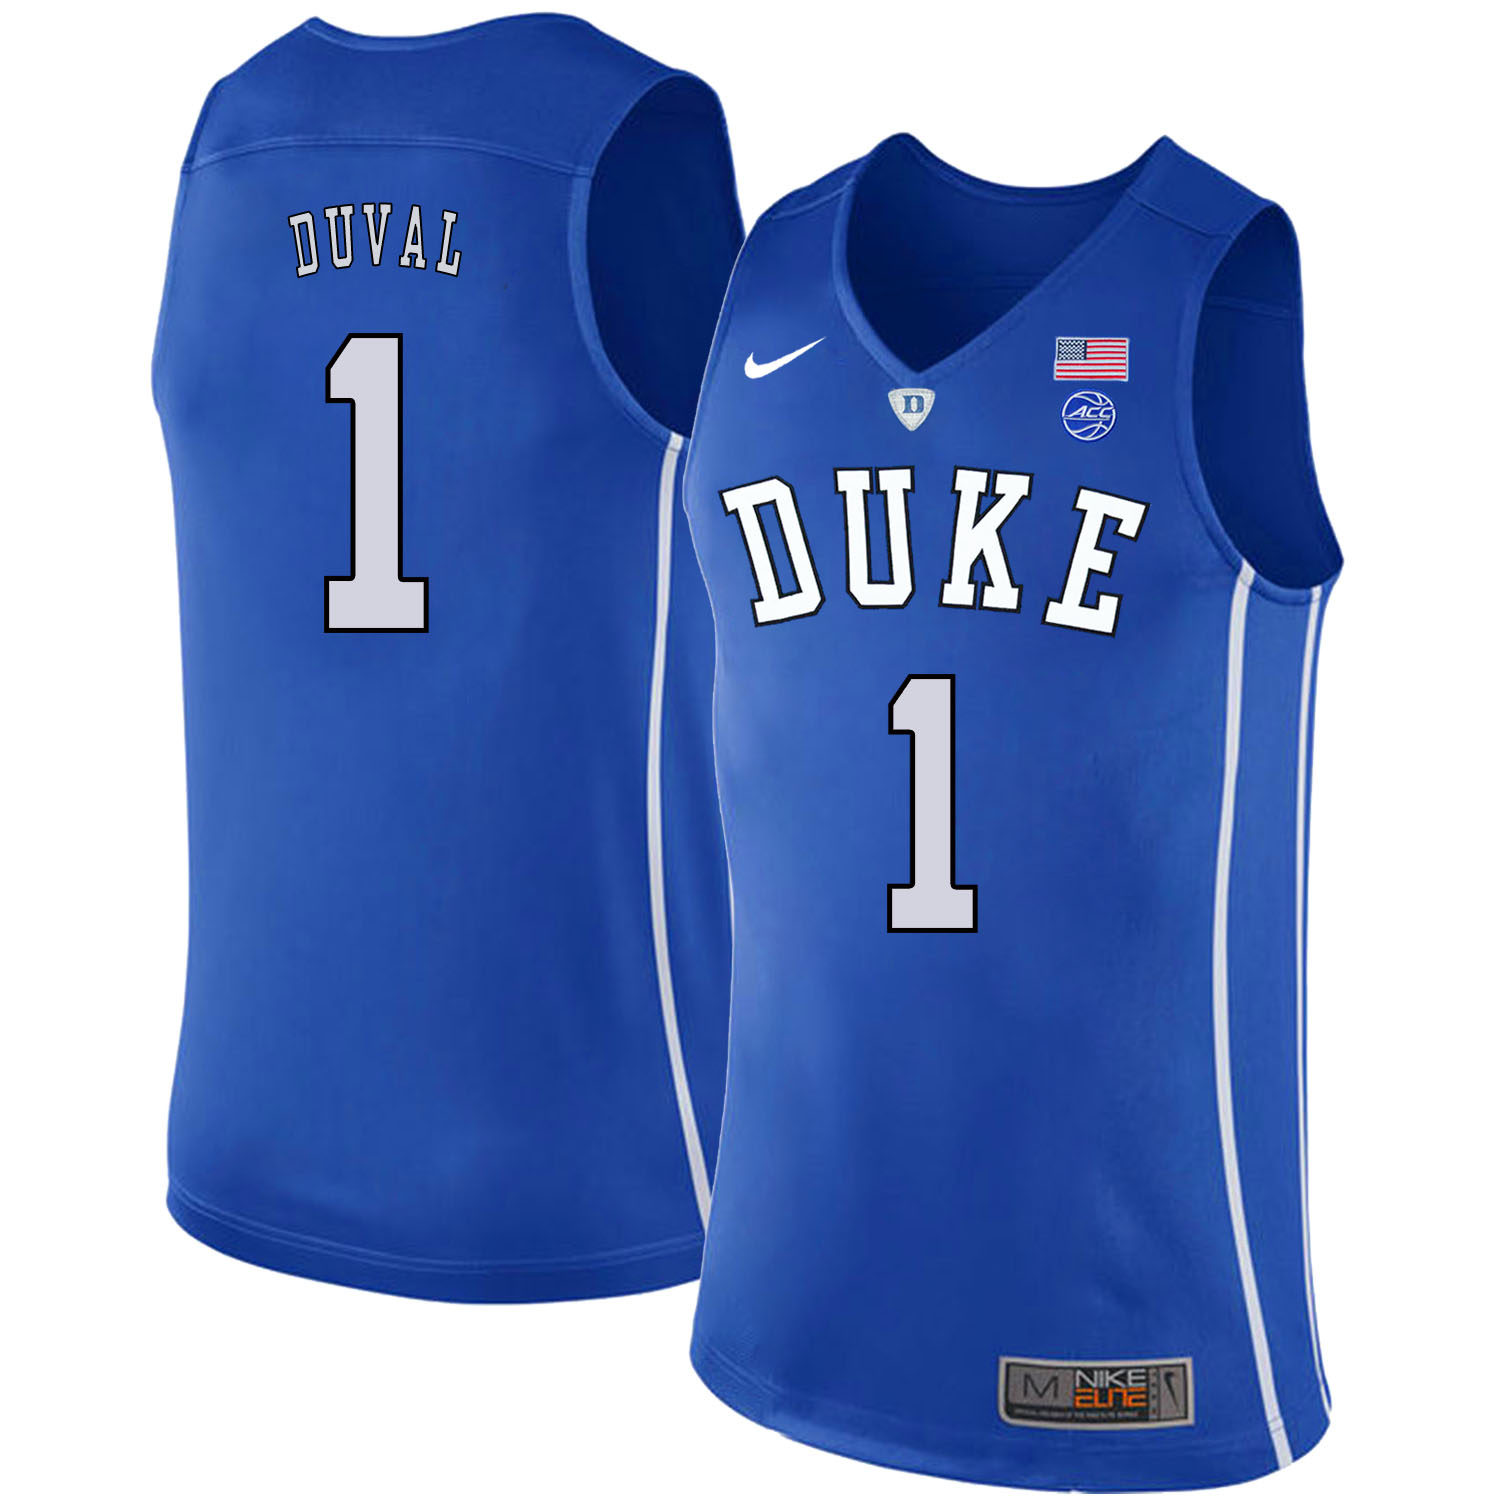 Duke Blue Devils 1 Trevon Duval Blue Nike College Basketabll Jersey